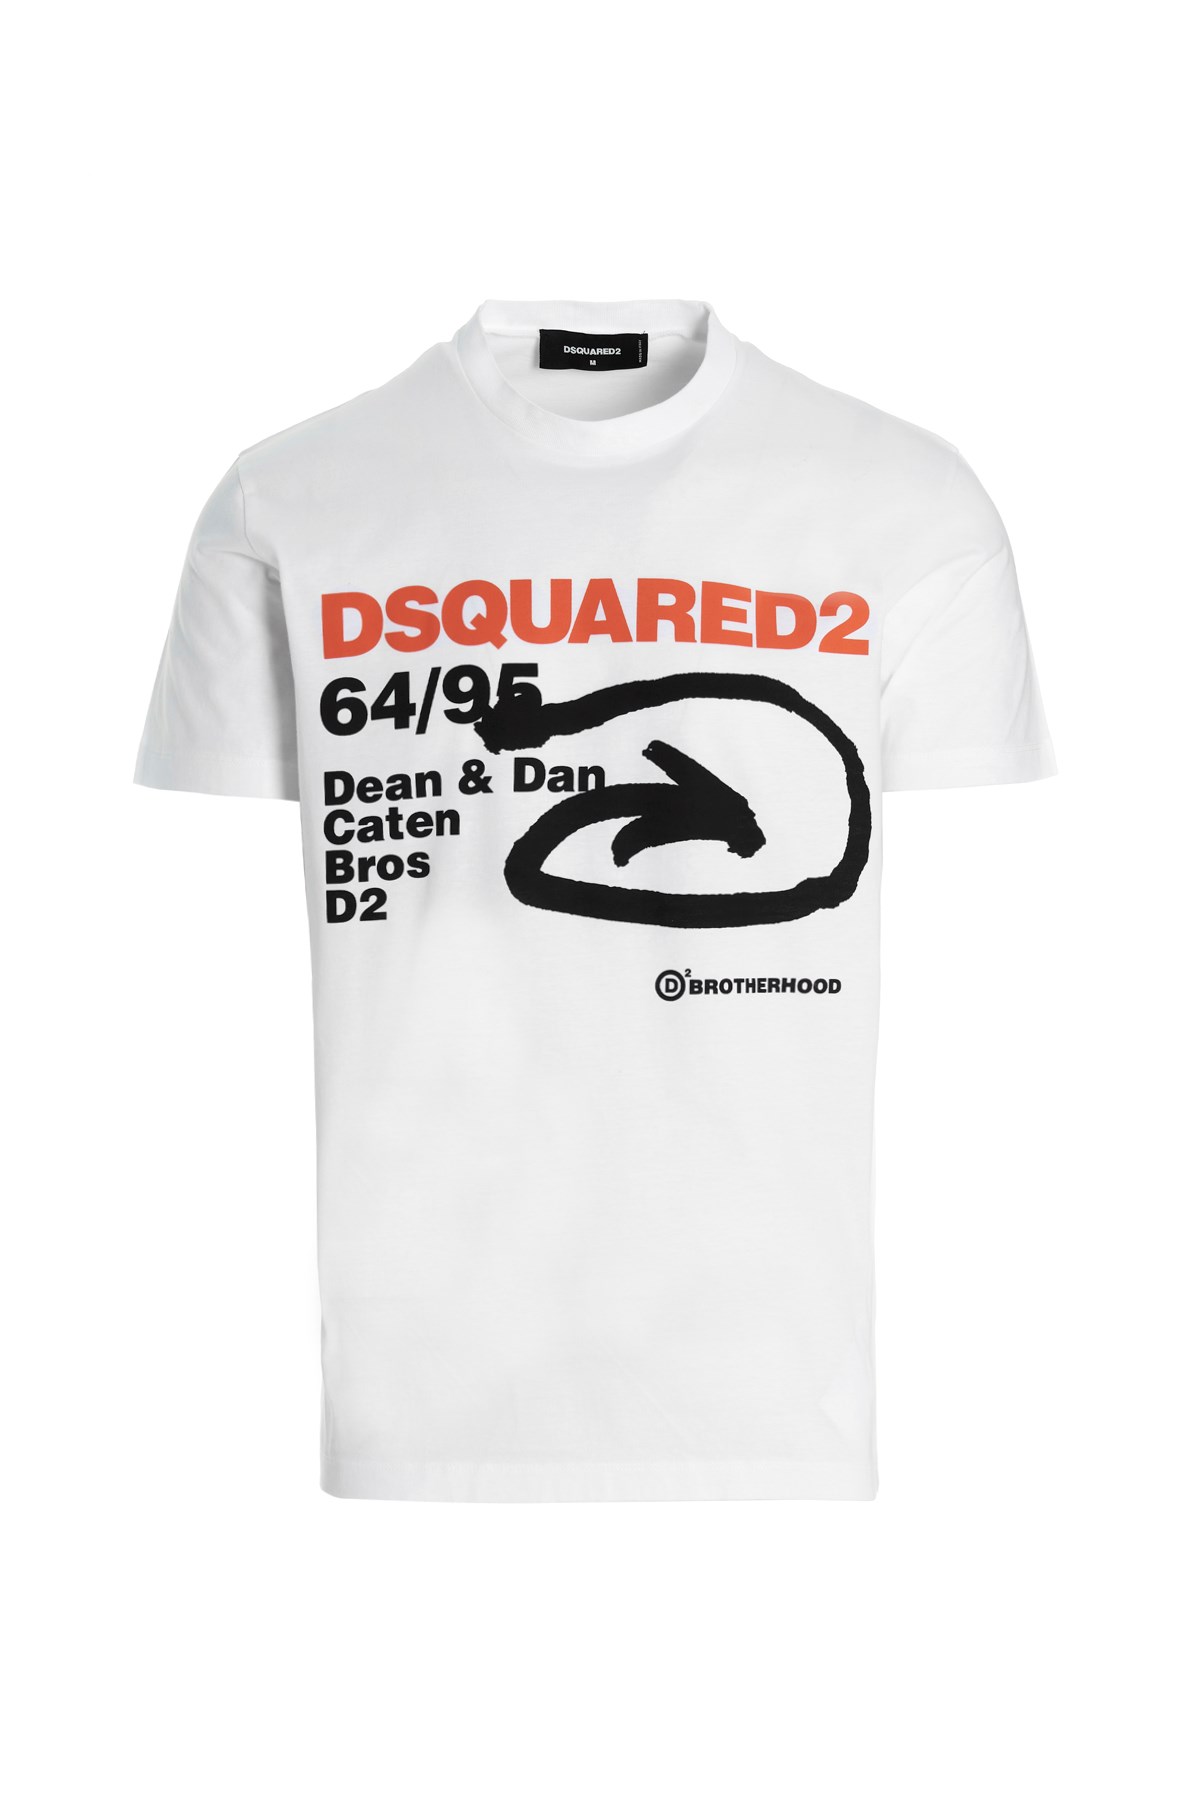 DSQUARED2 '6495 Arrow Cool’ T-Shirt